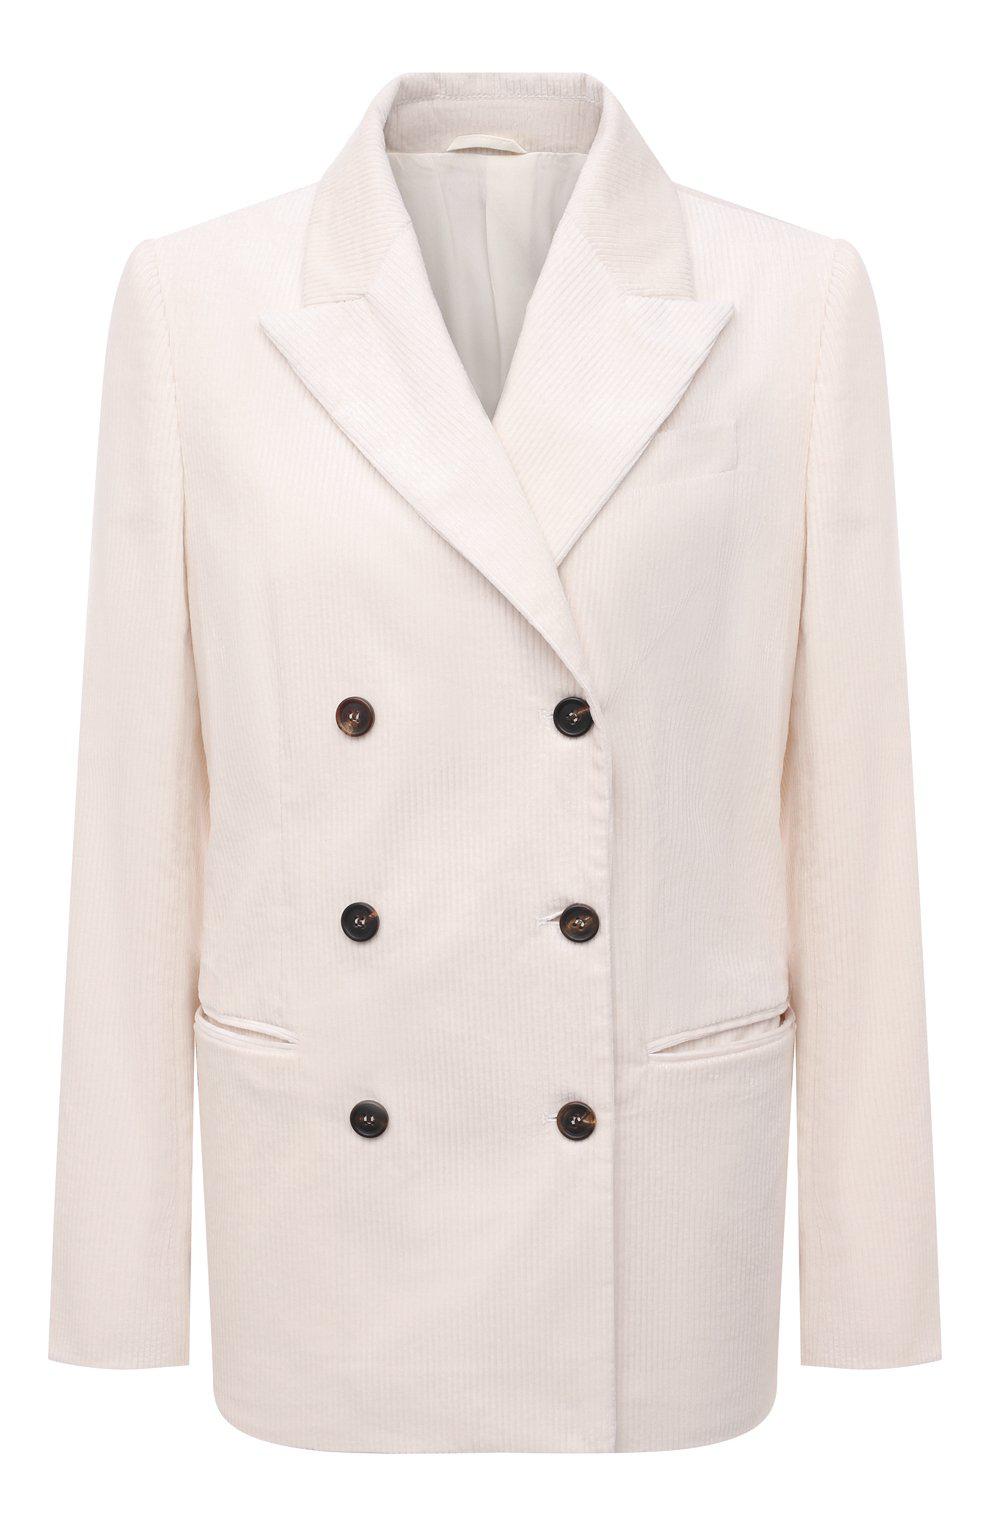 Corduroy jacket, Brunello Cucinelli, RUB 395,500.